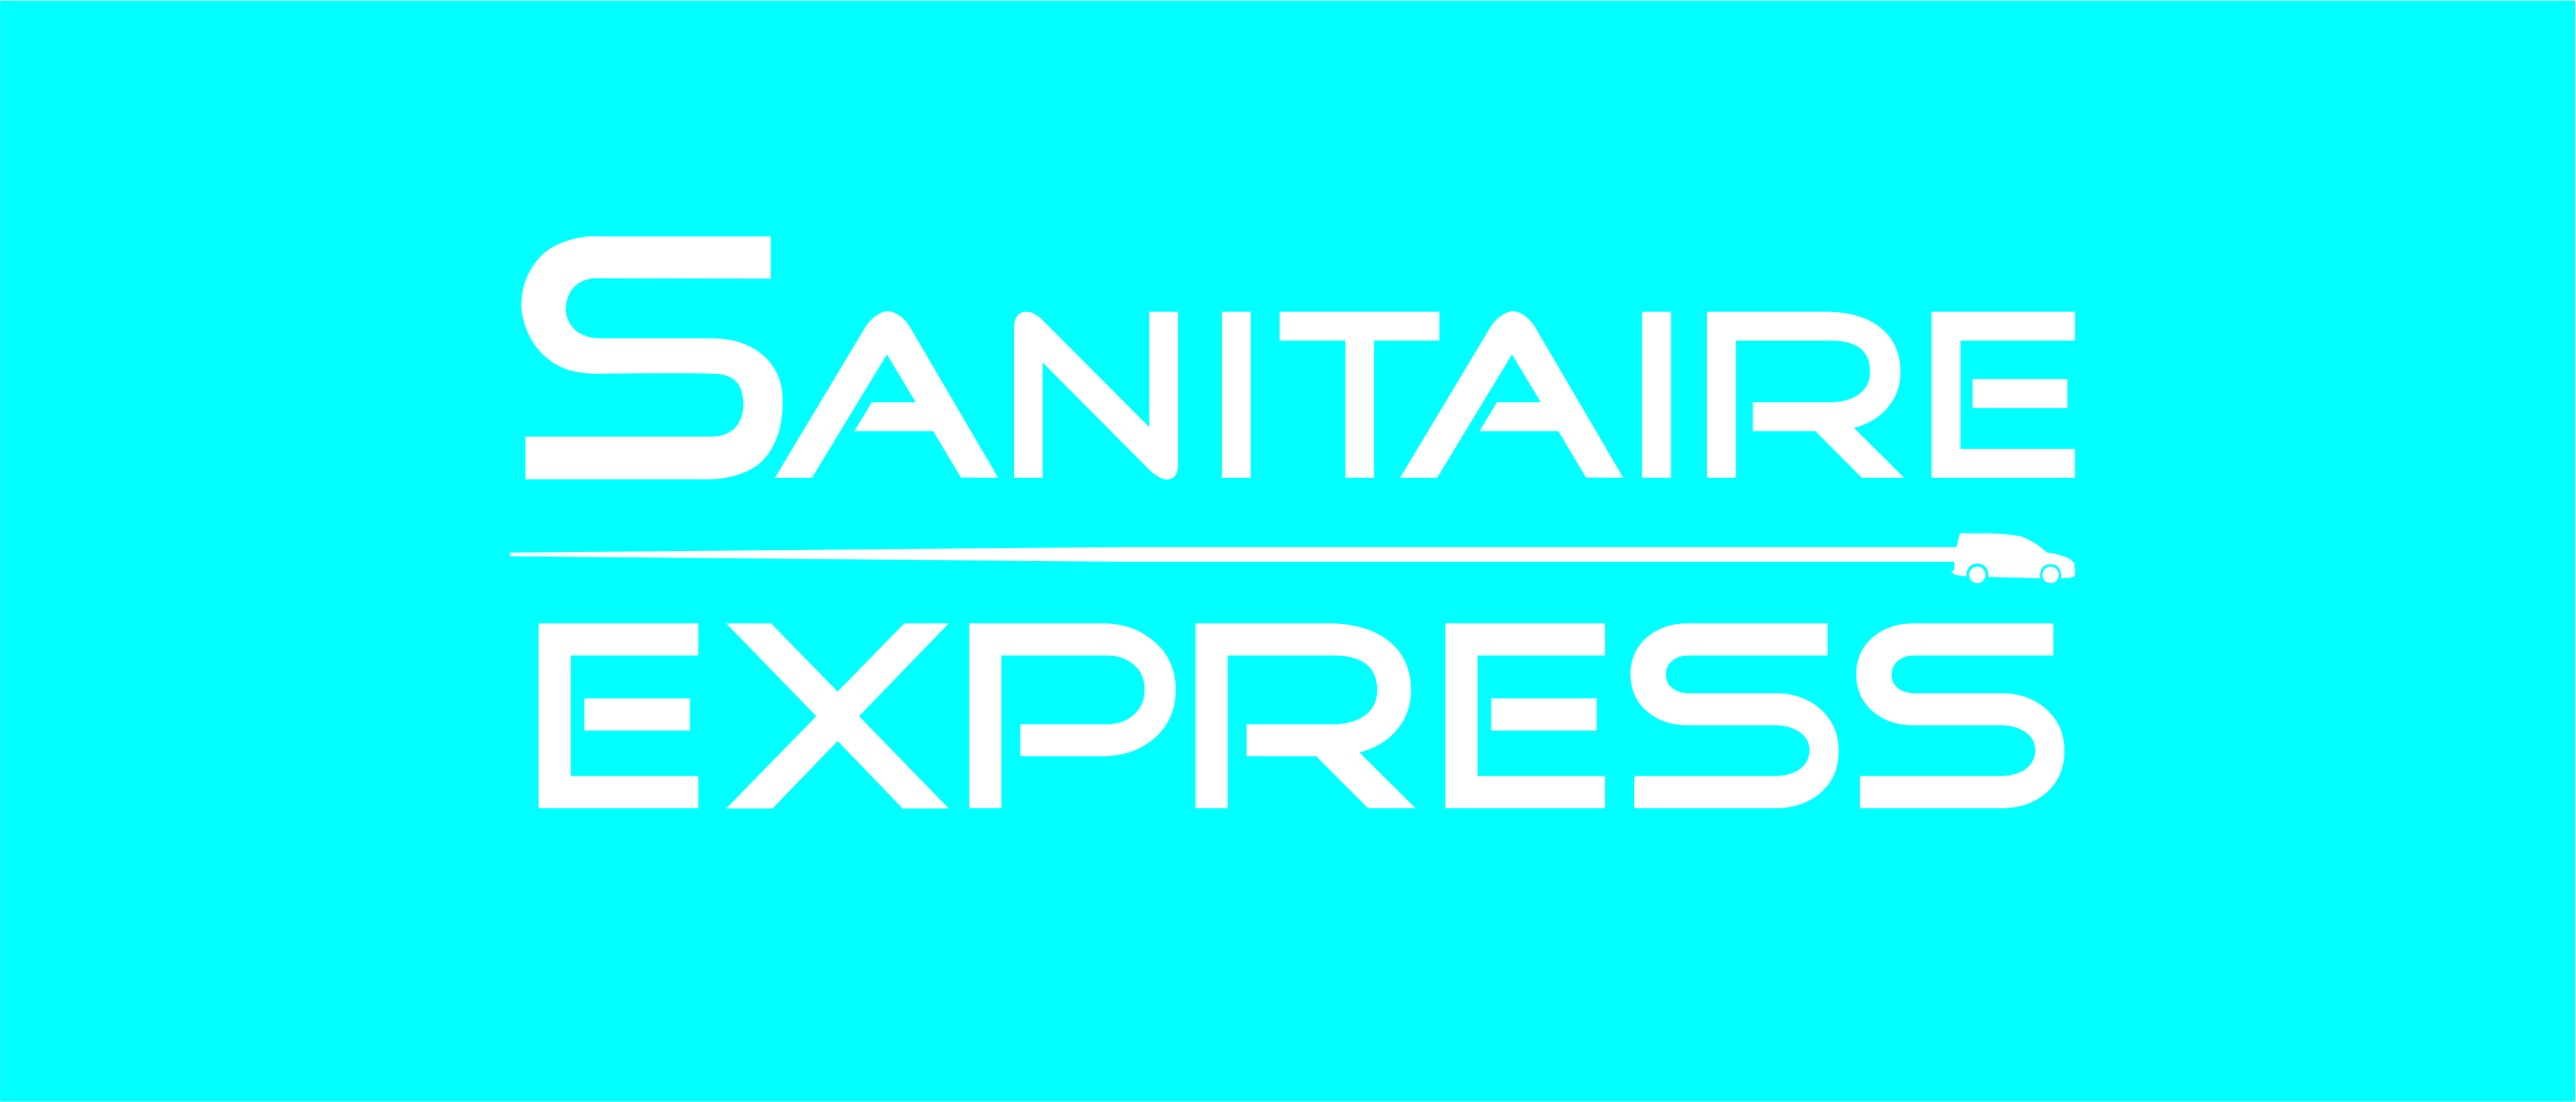 Sanitaire express